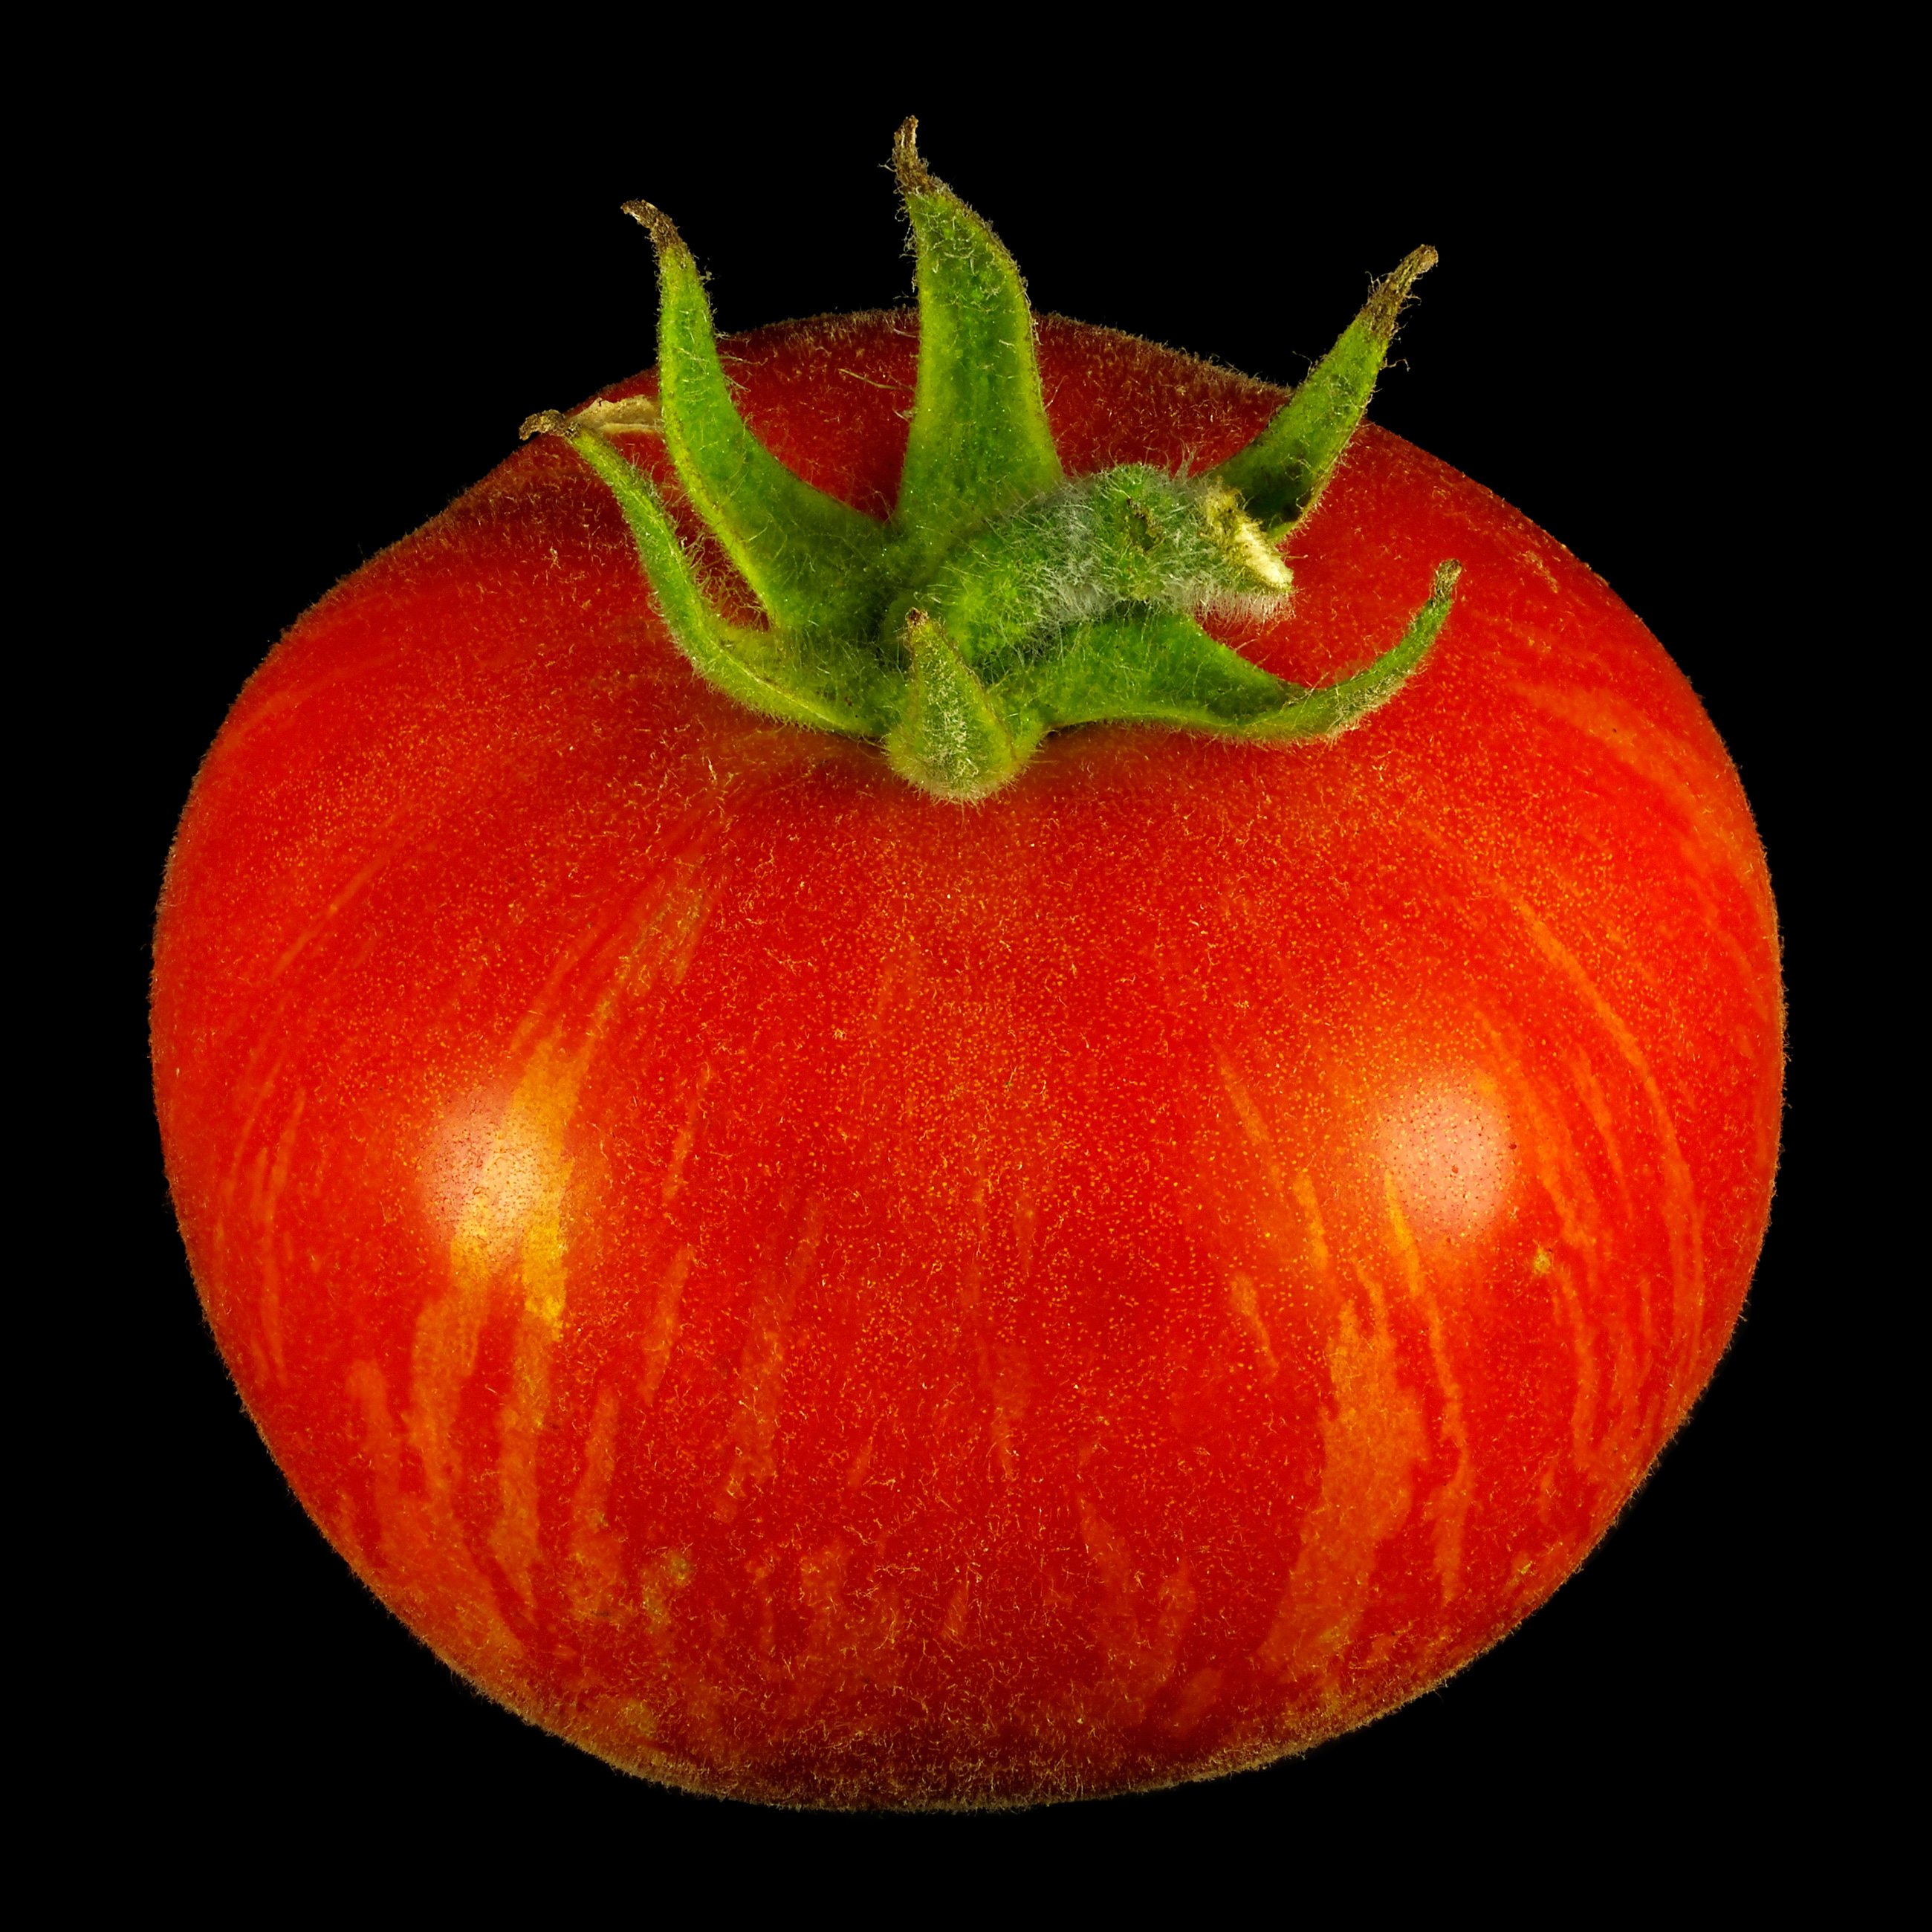 Elberta Girl Tomato: Solanum lycopersicum ‚Elberta Girl‘